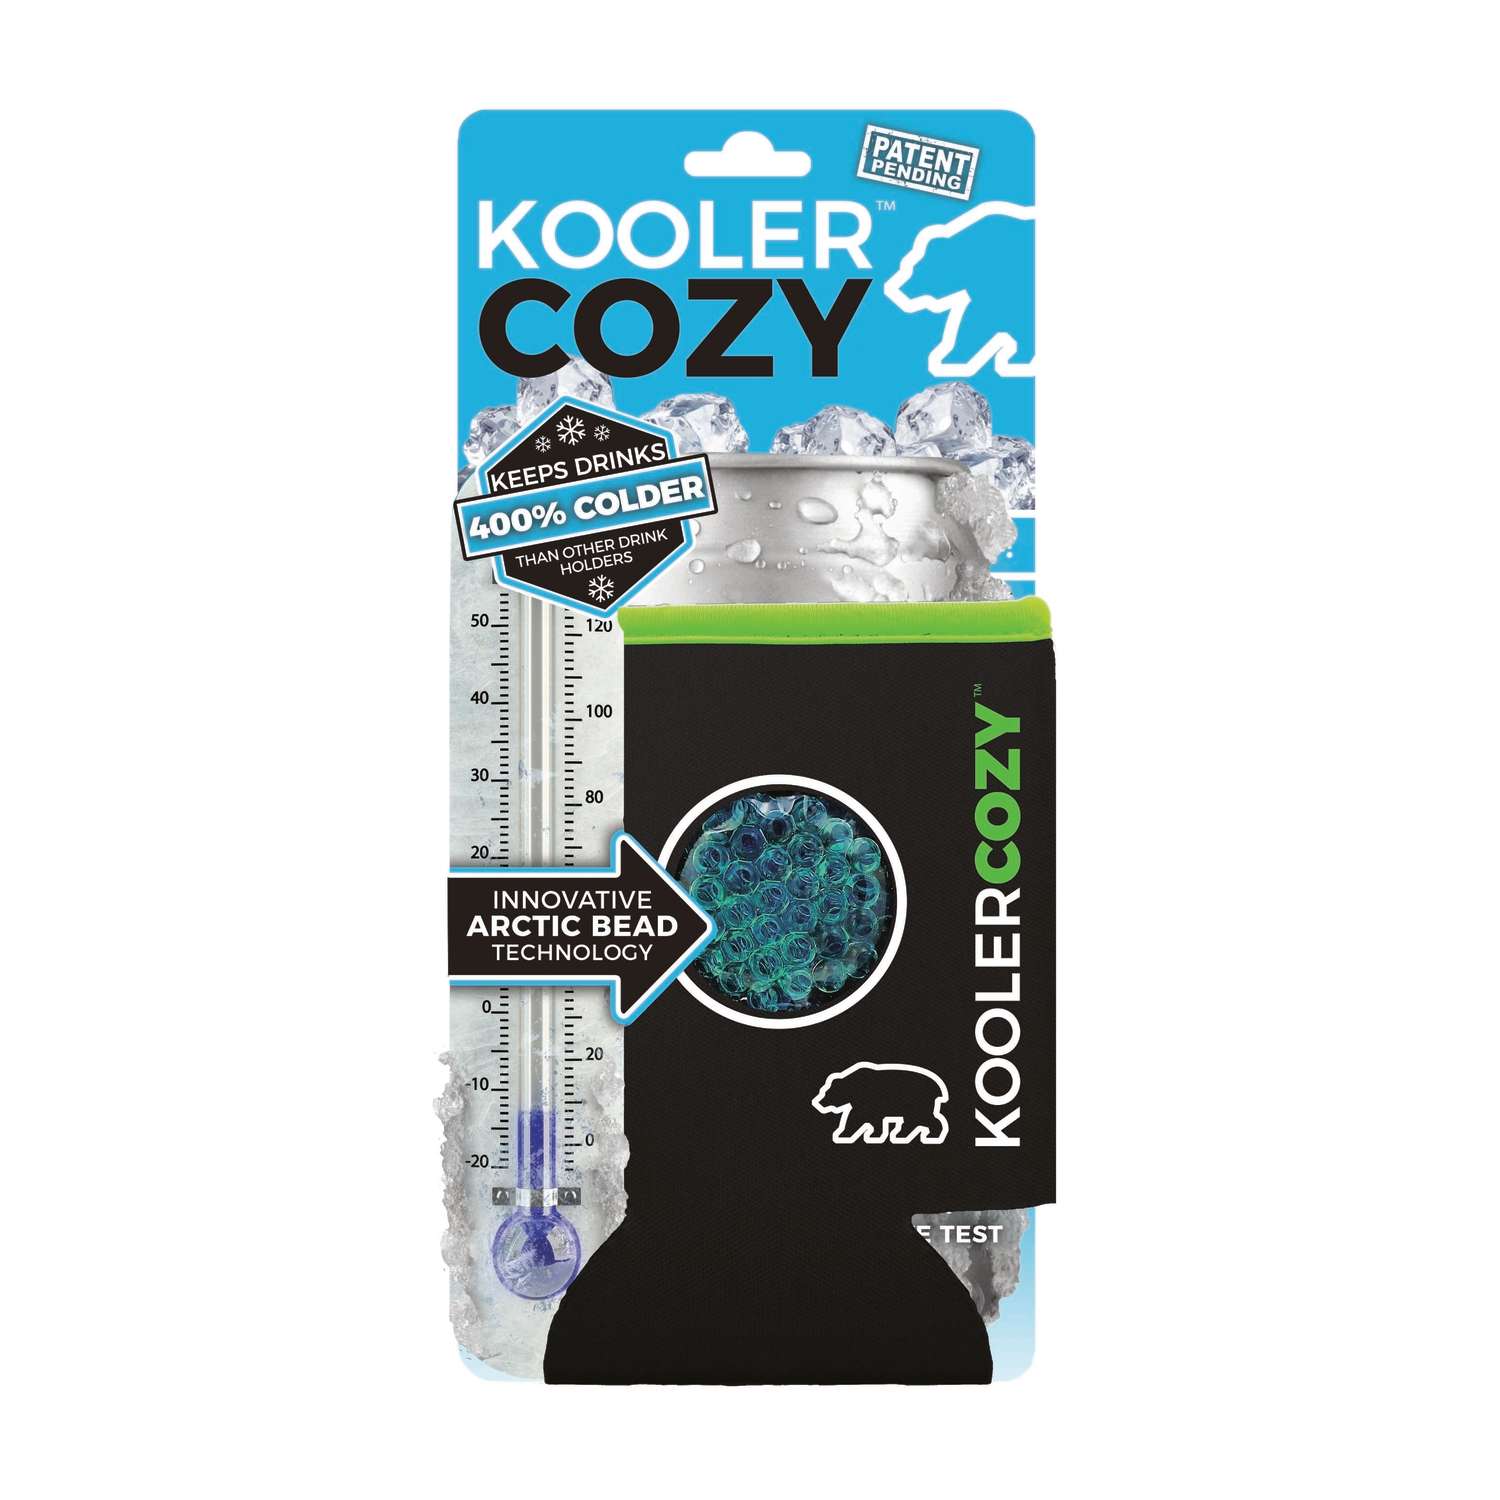  Cozy Tower 10 Pcs Drip Irrigation Kit, 1/2 Inch Drip